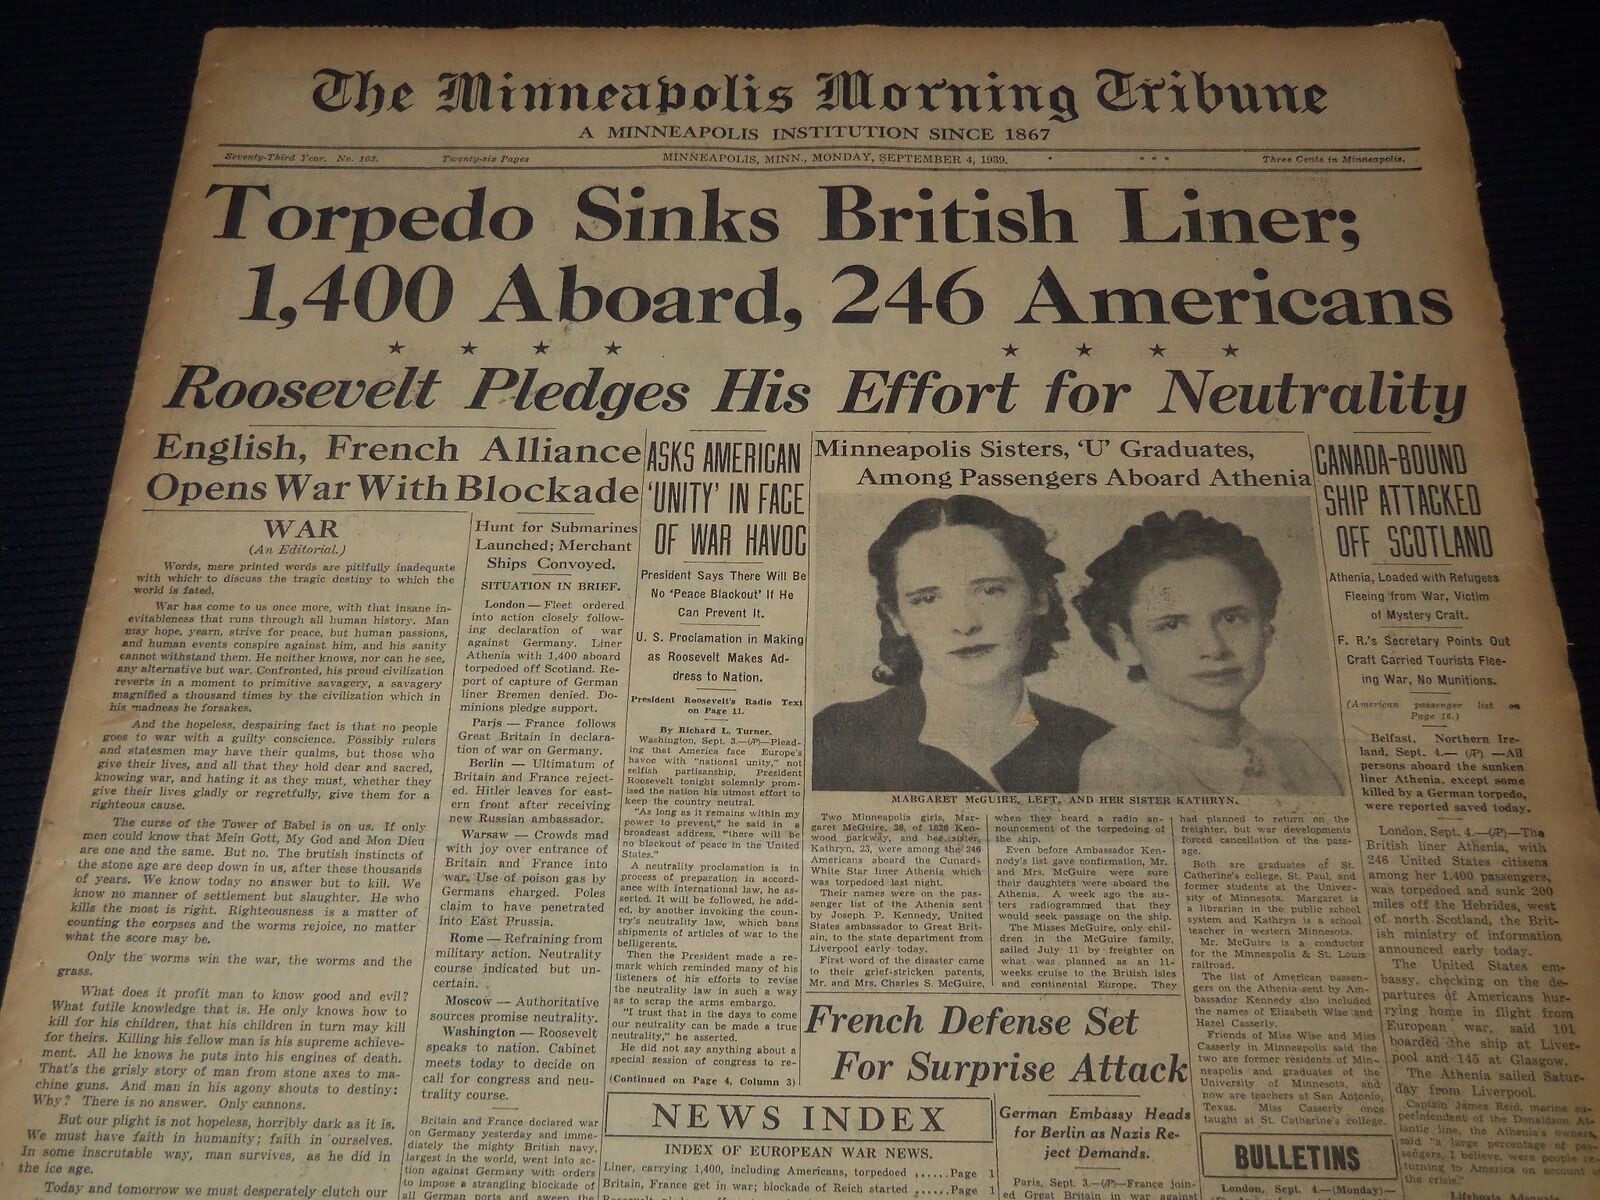 1939 SEPT 4 MINNEAPOLIS MORNING TRIBUNE - TORPEDO SINKS BRITISH LINER - NT 9520